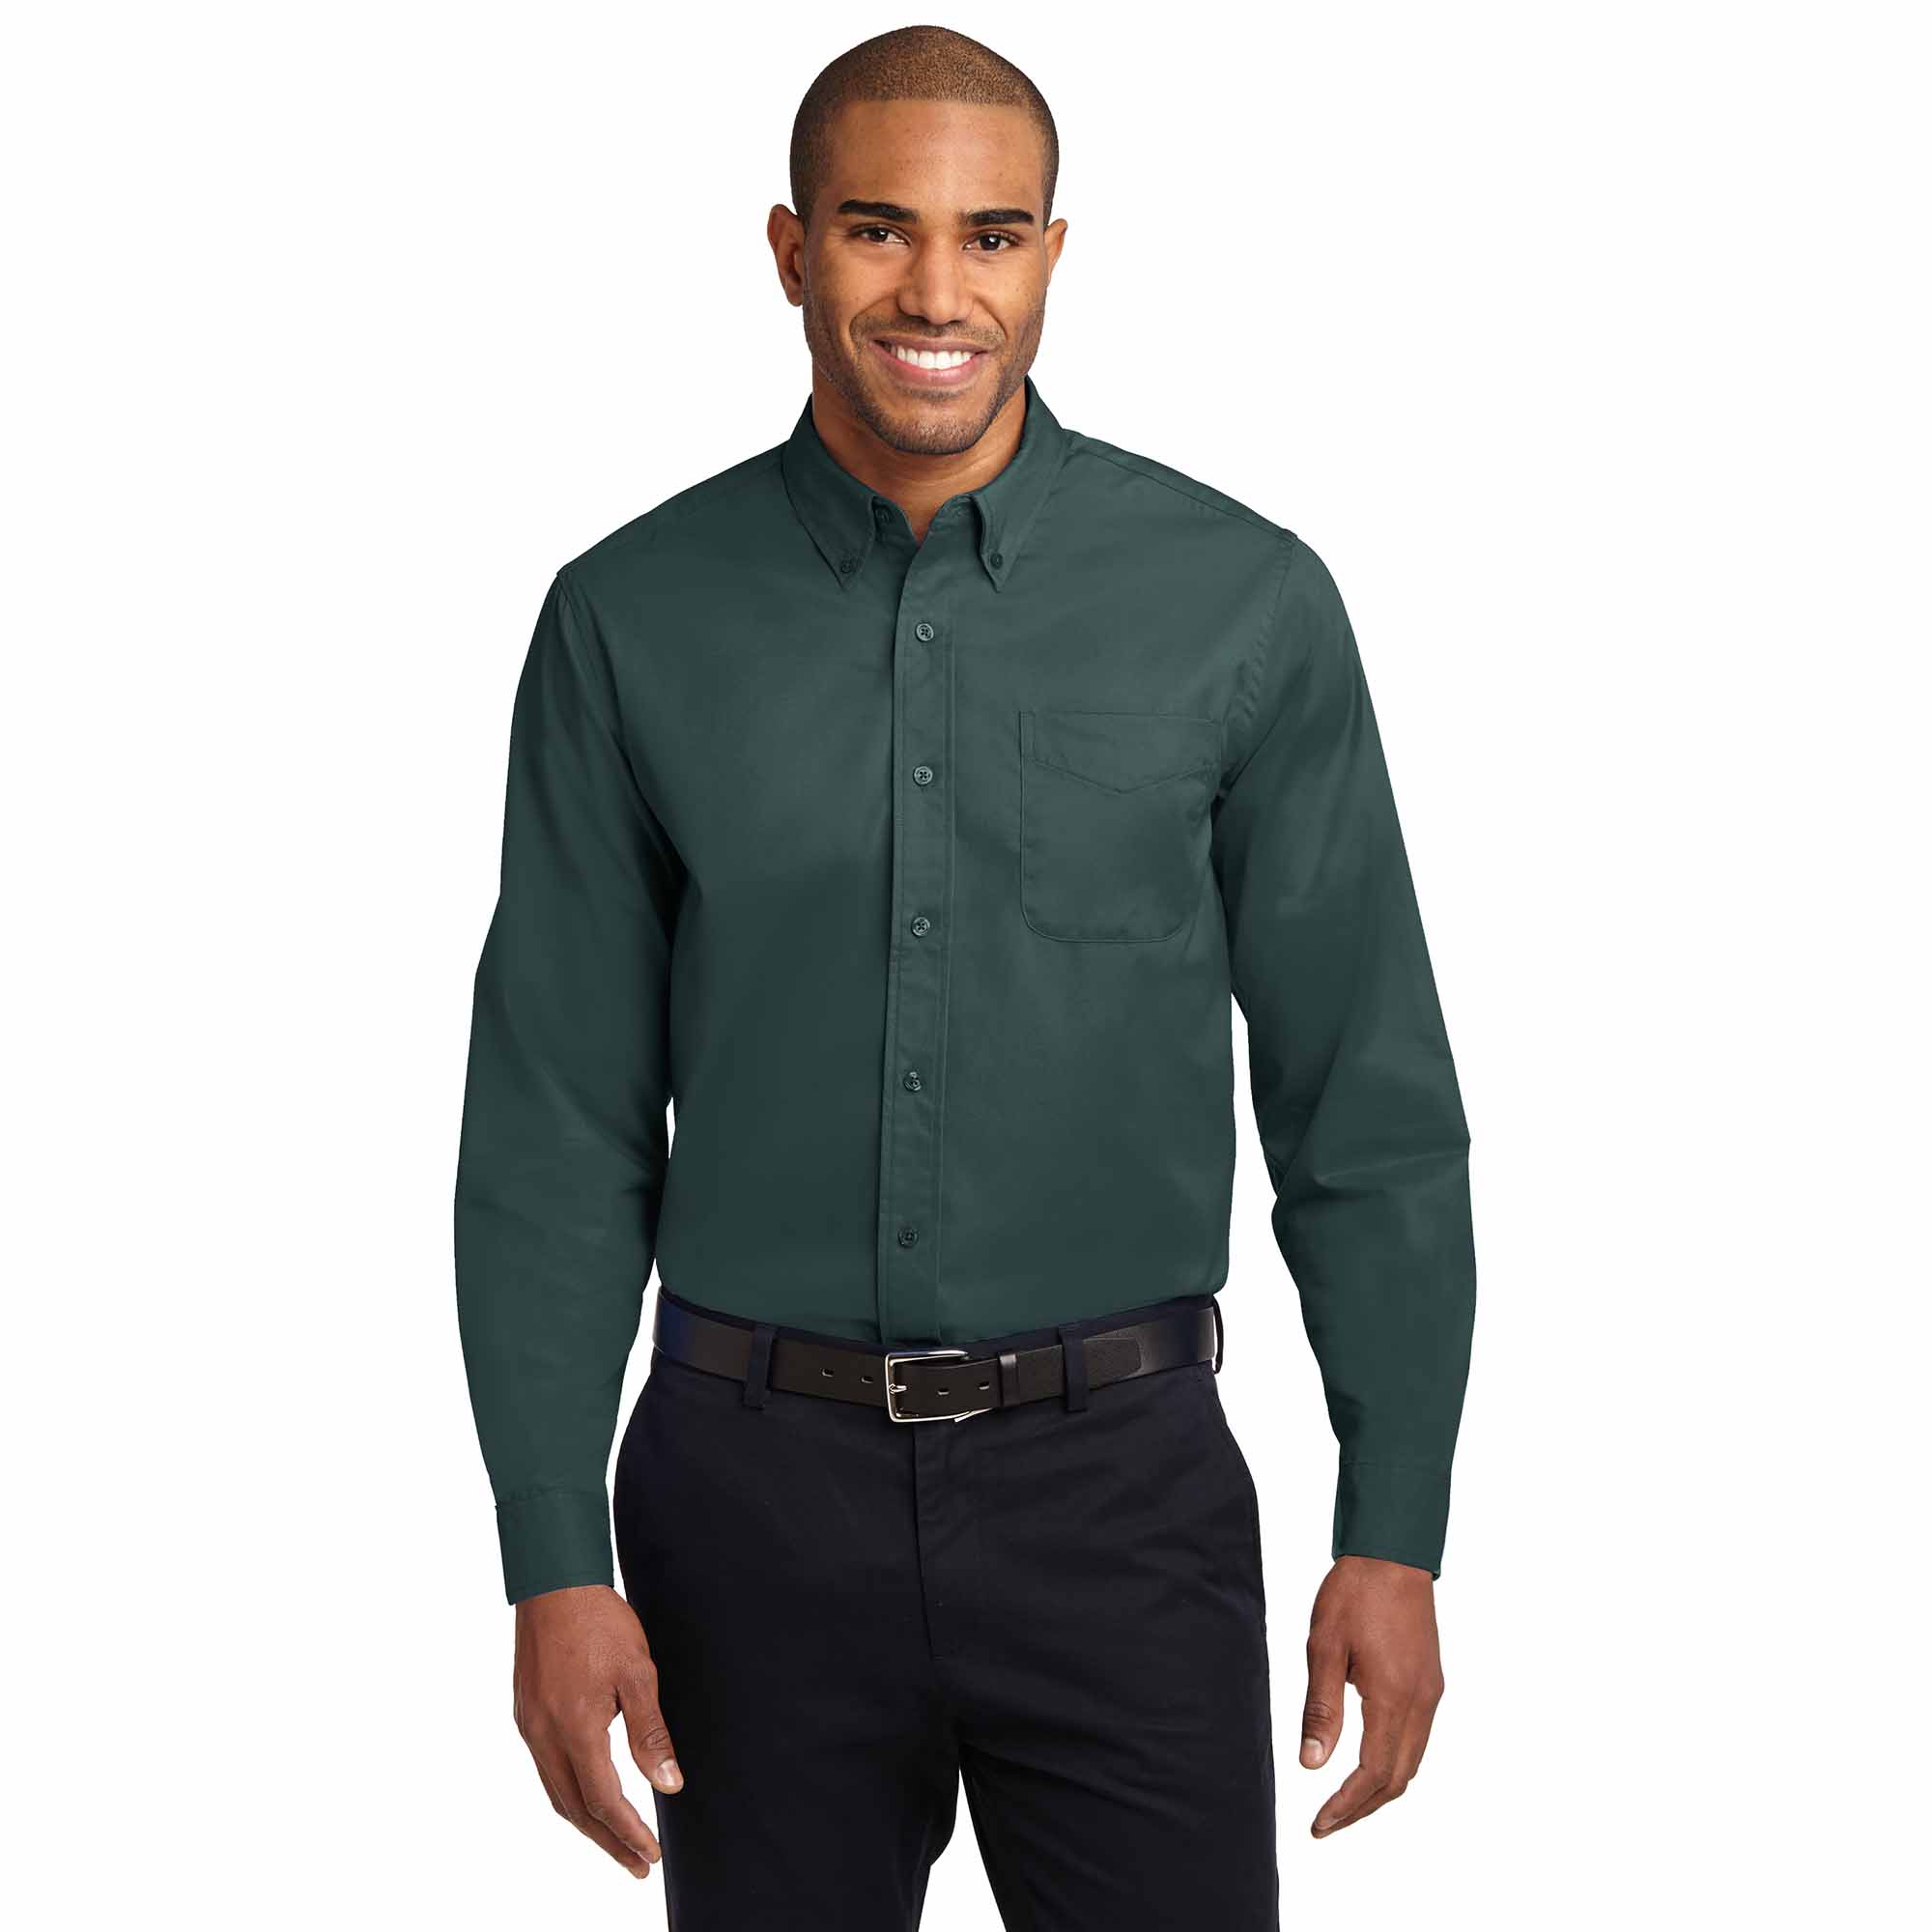 Port Authority S608 Long Sleeve Easy Care Shirt - Dark Green/Navy ...